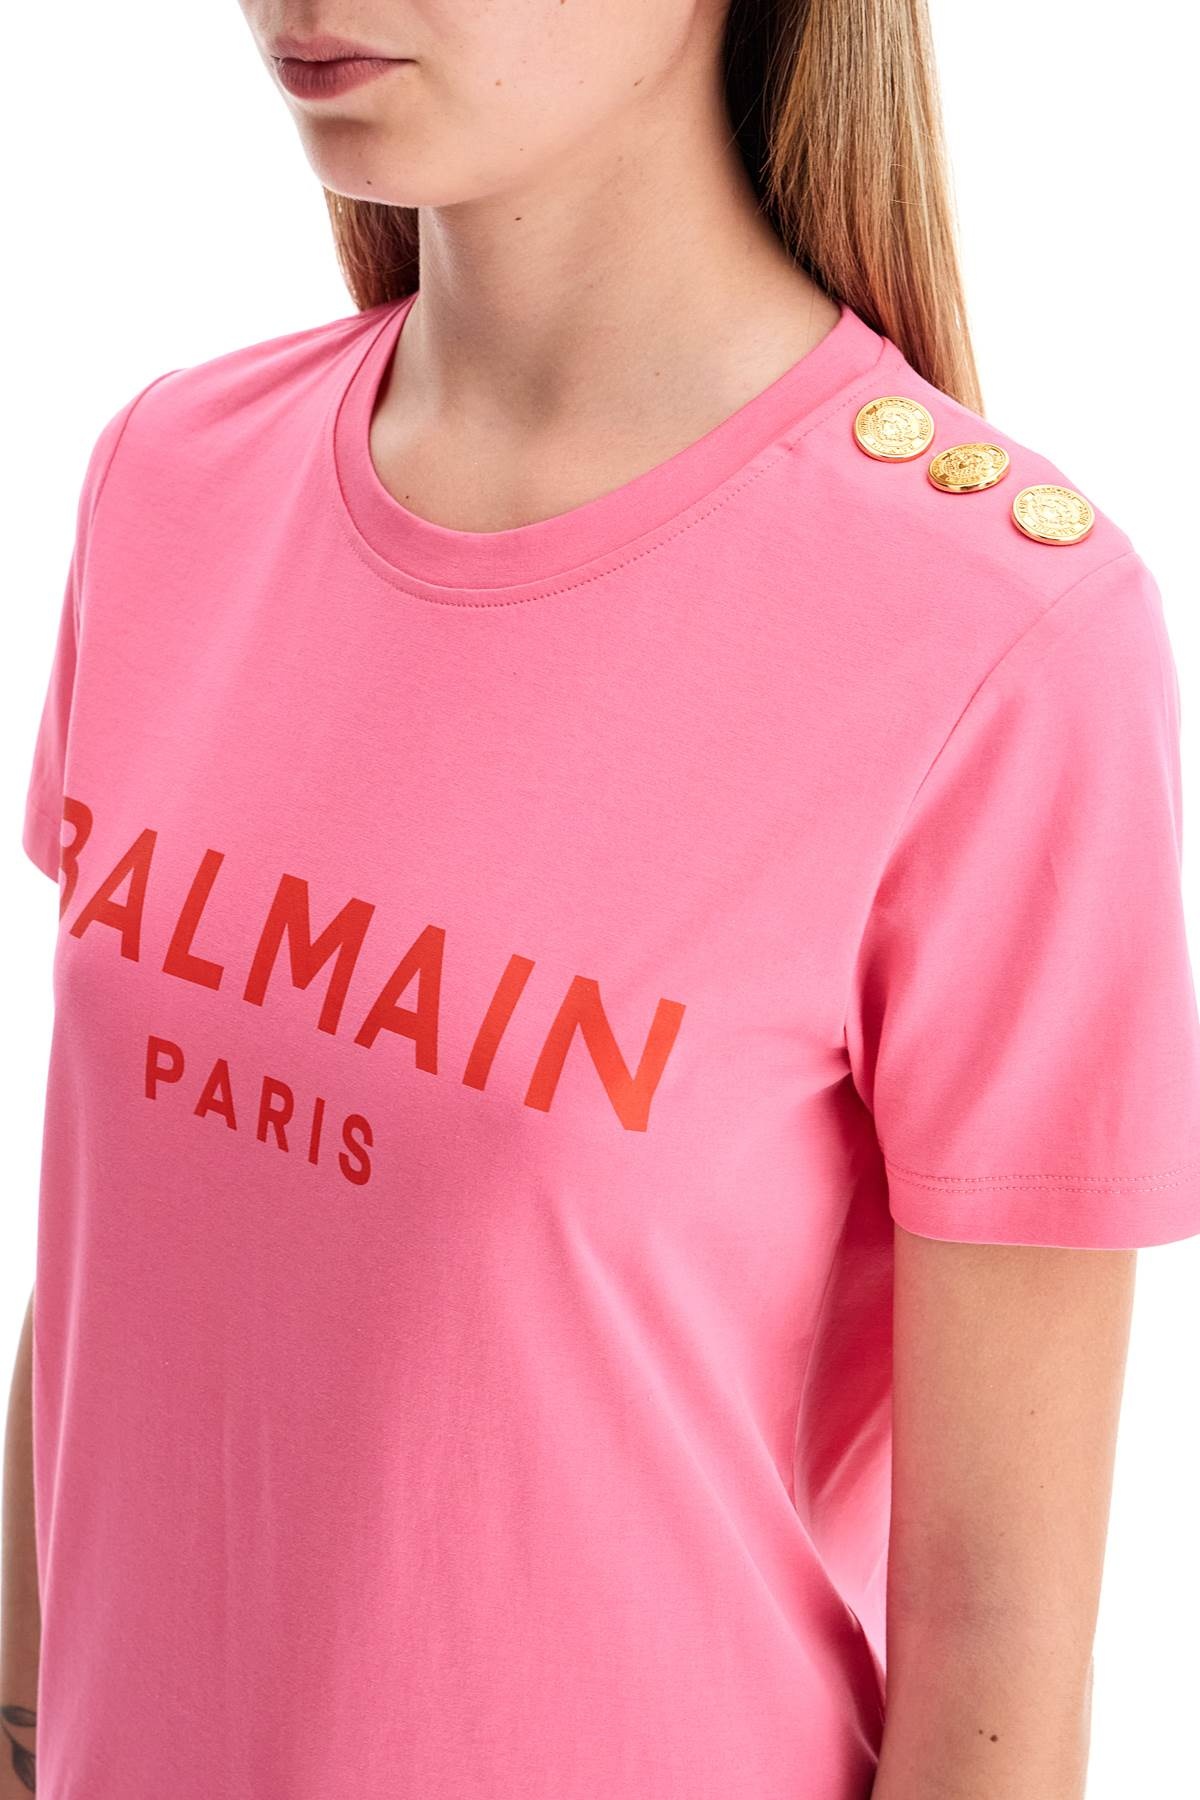 Balmain Logo T Shirt With Buttons - 5